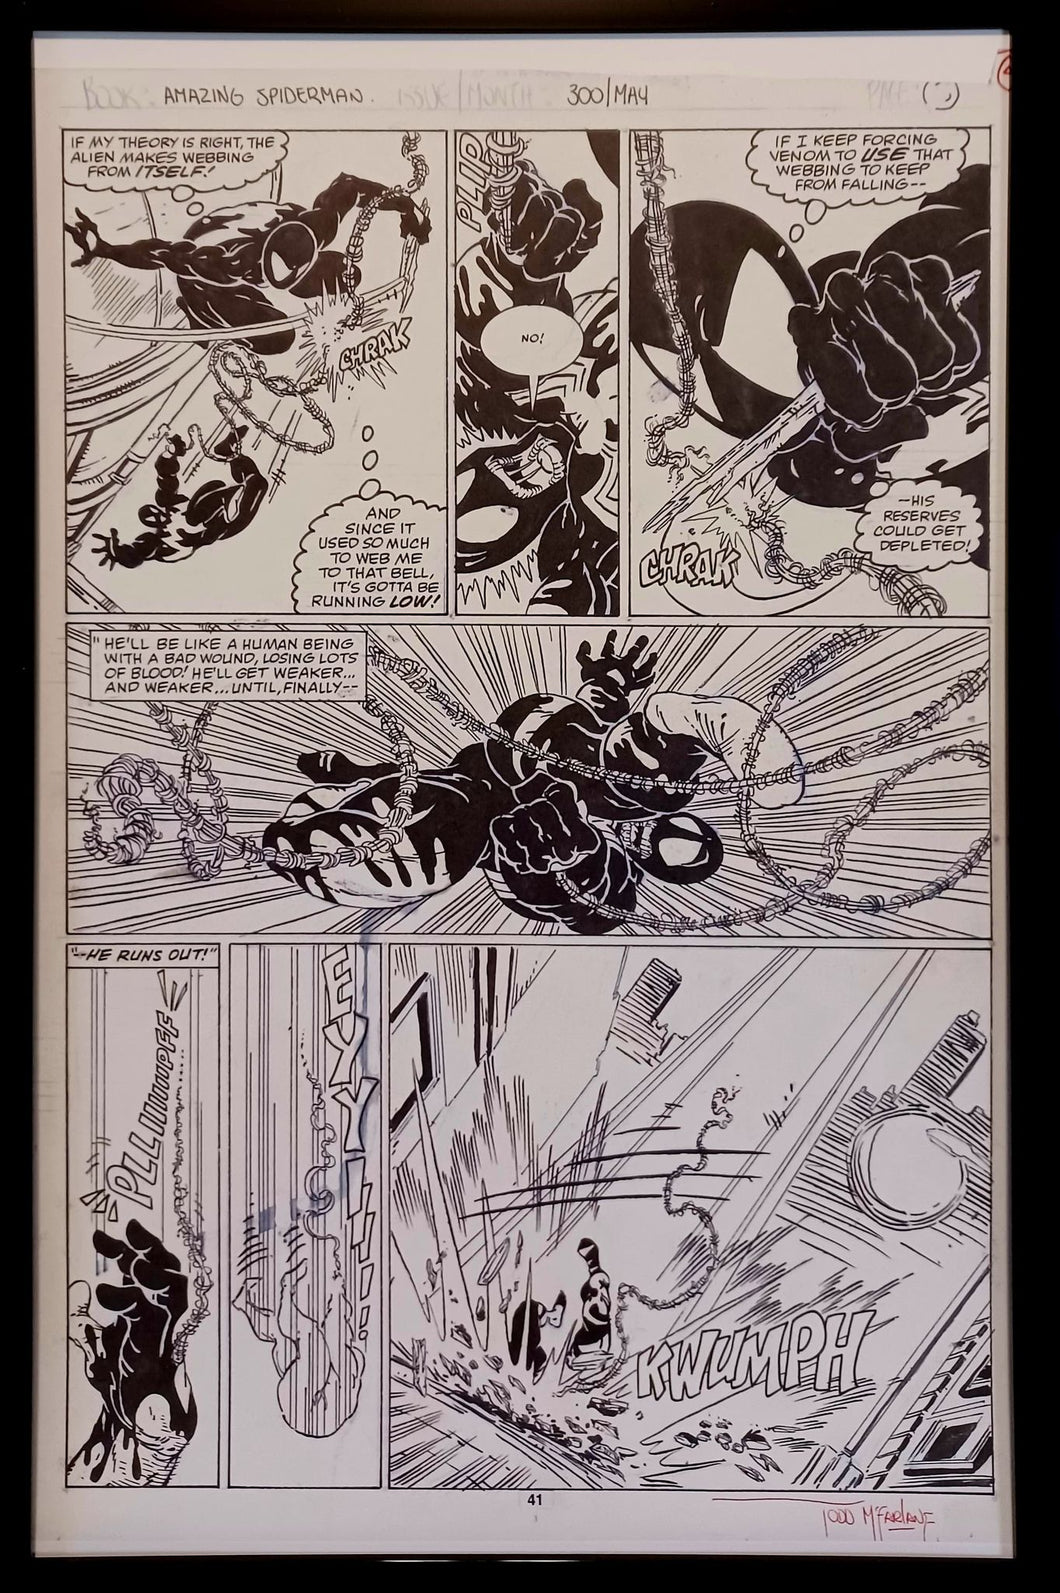 Amazing Spider-Man #300 pg. 36 by Todd McFarlane 11x17 FRAMED Original Art Print Comic Poster